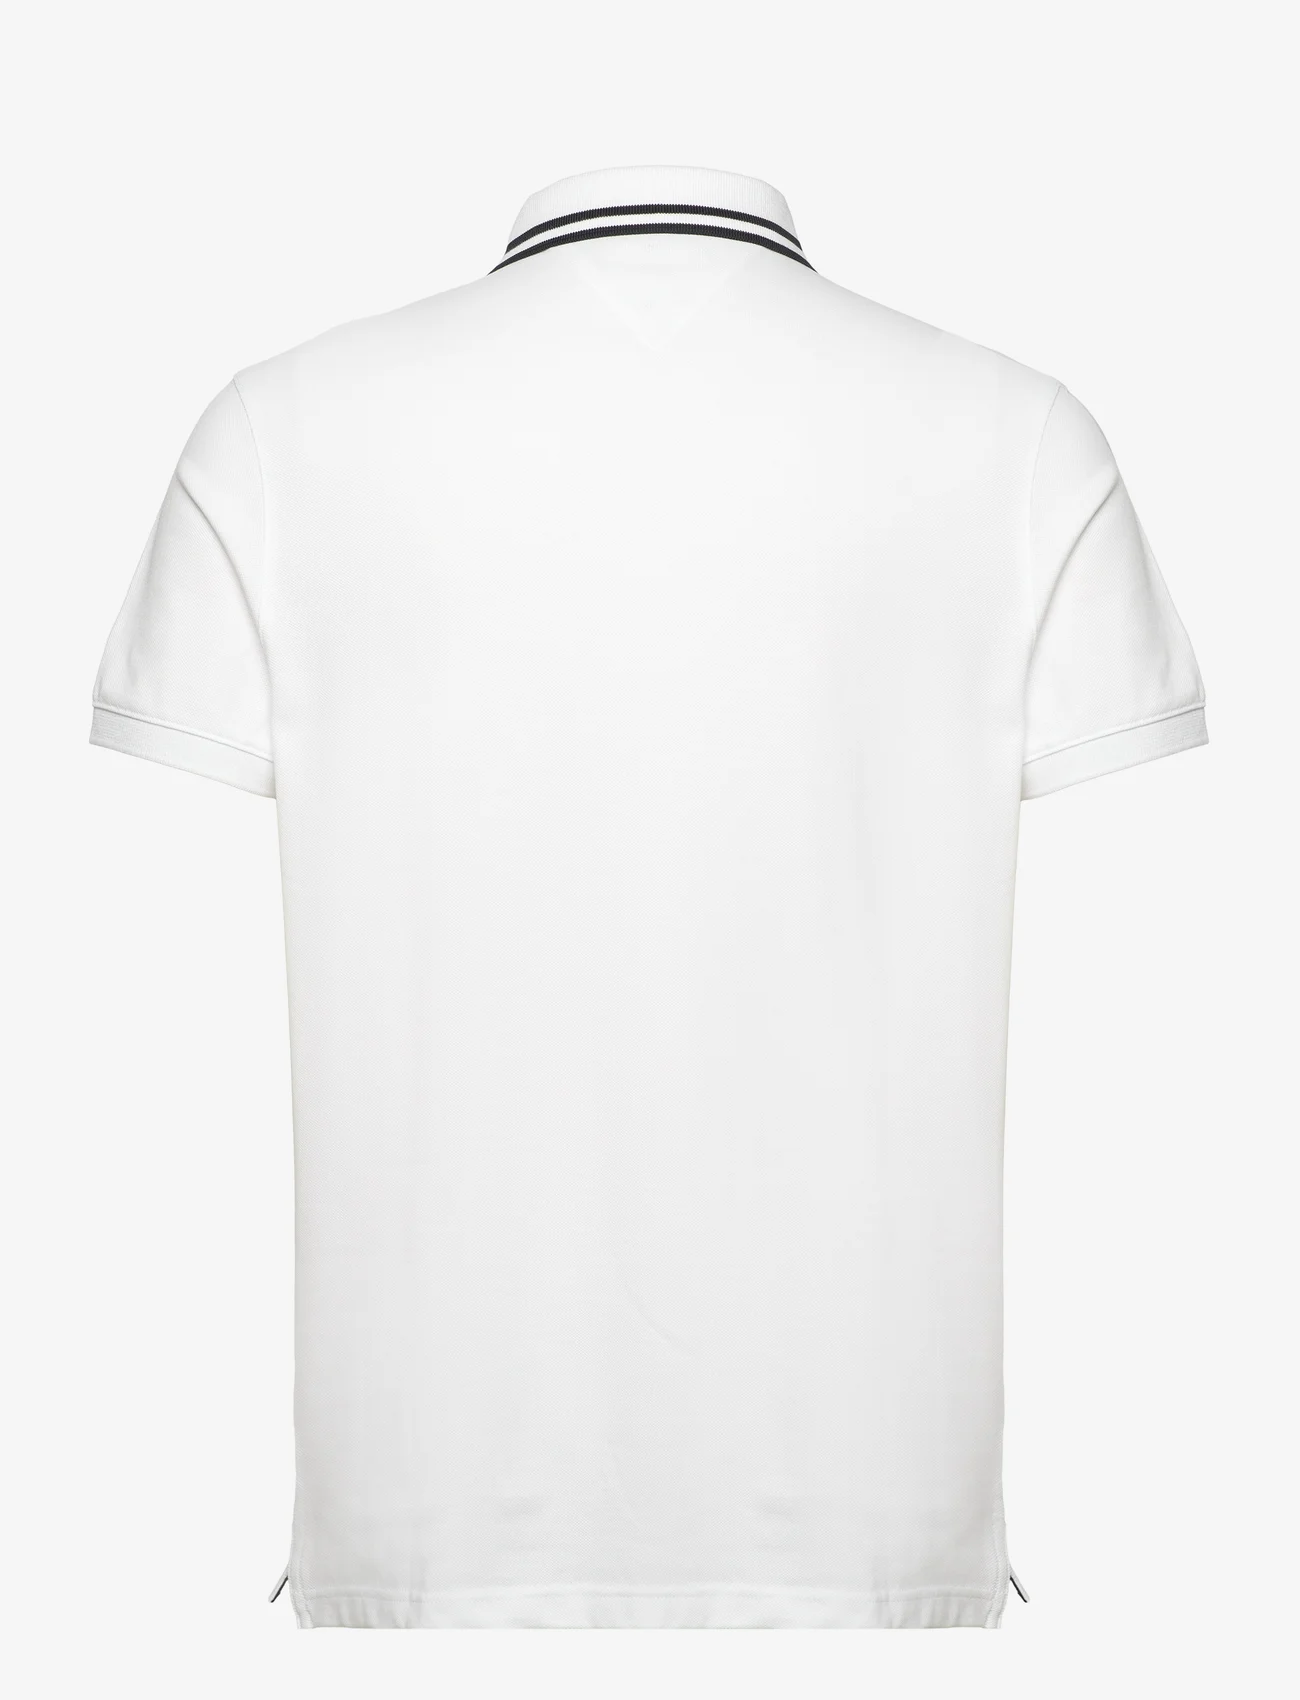 Tommy Hilfiger - MONOTYPE BADGE REG POLO - polo shirts - white - 1